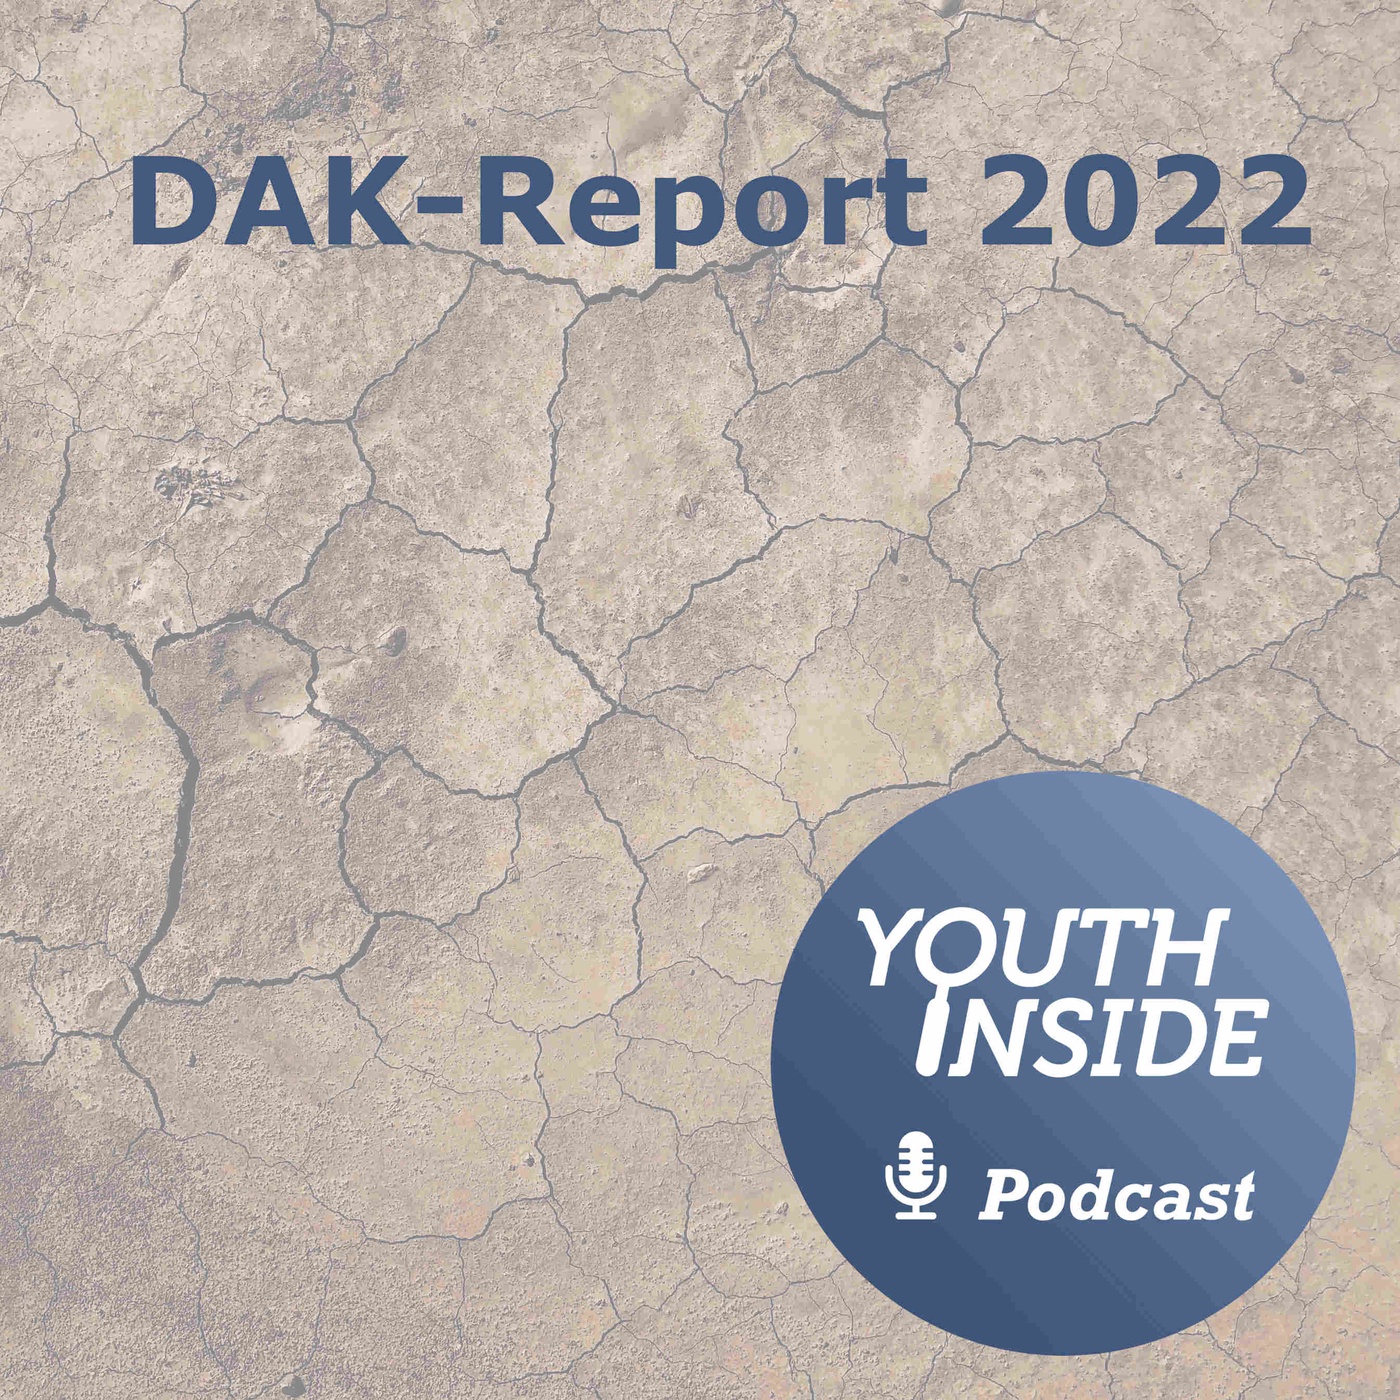 DAK-Report 2022